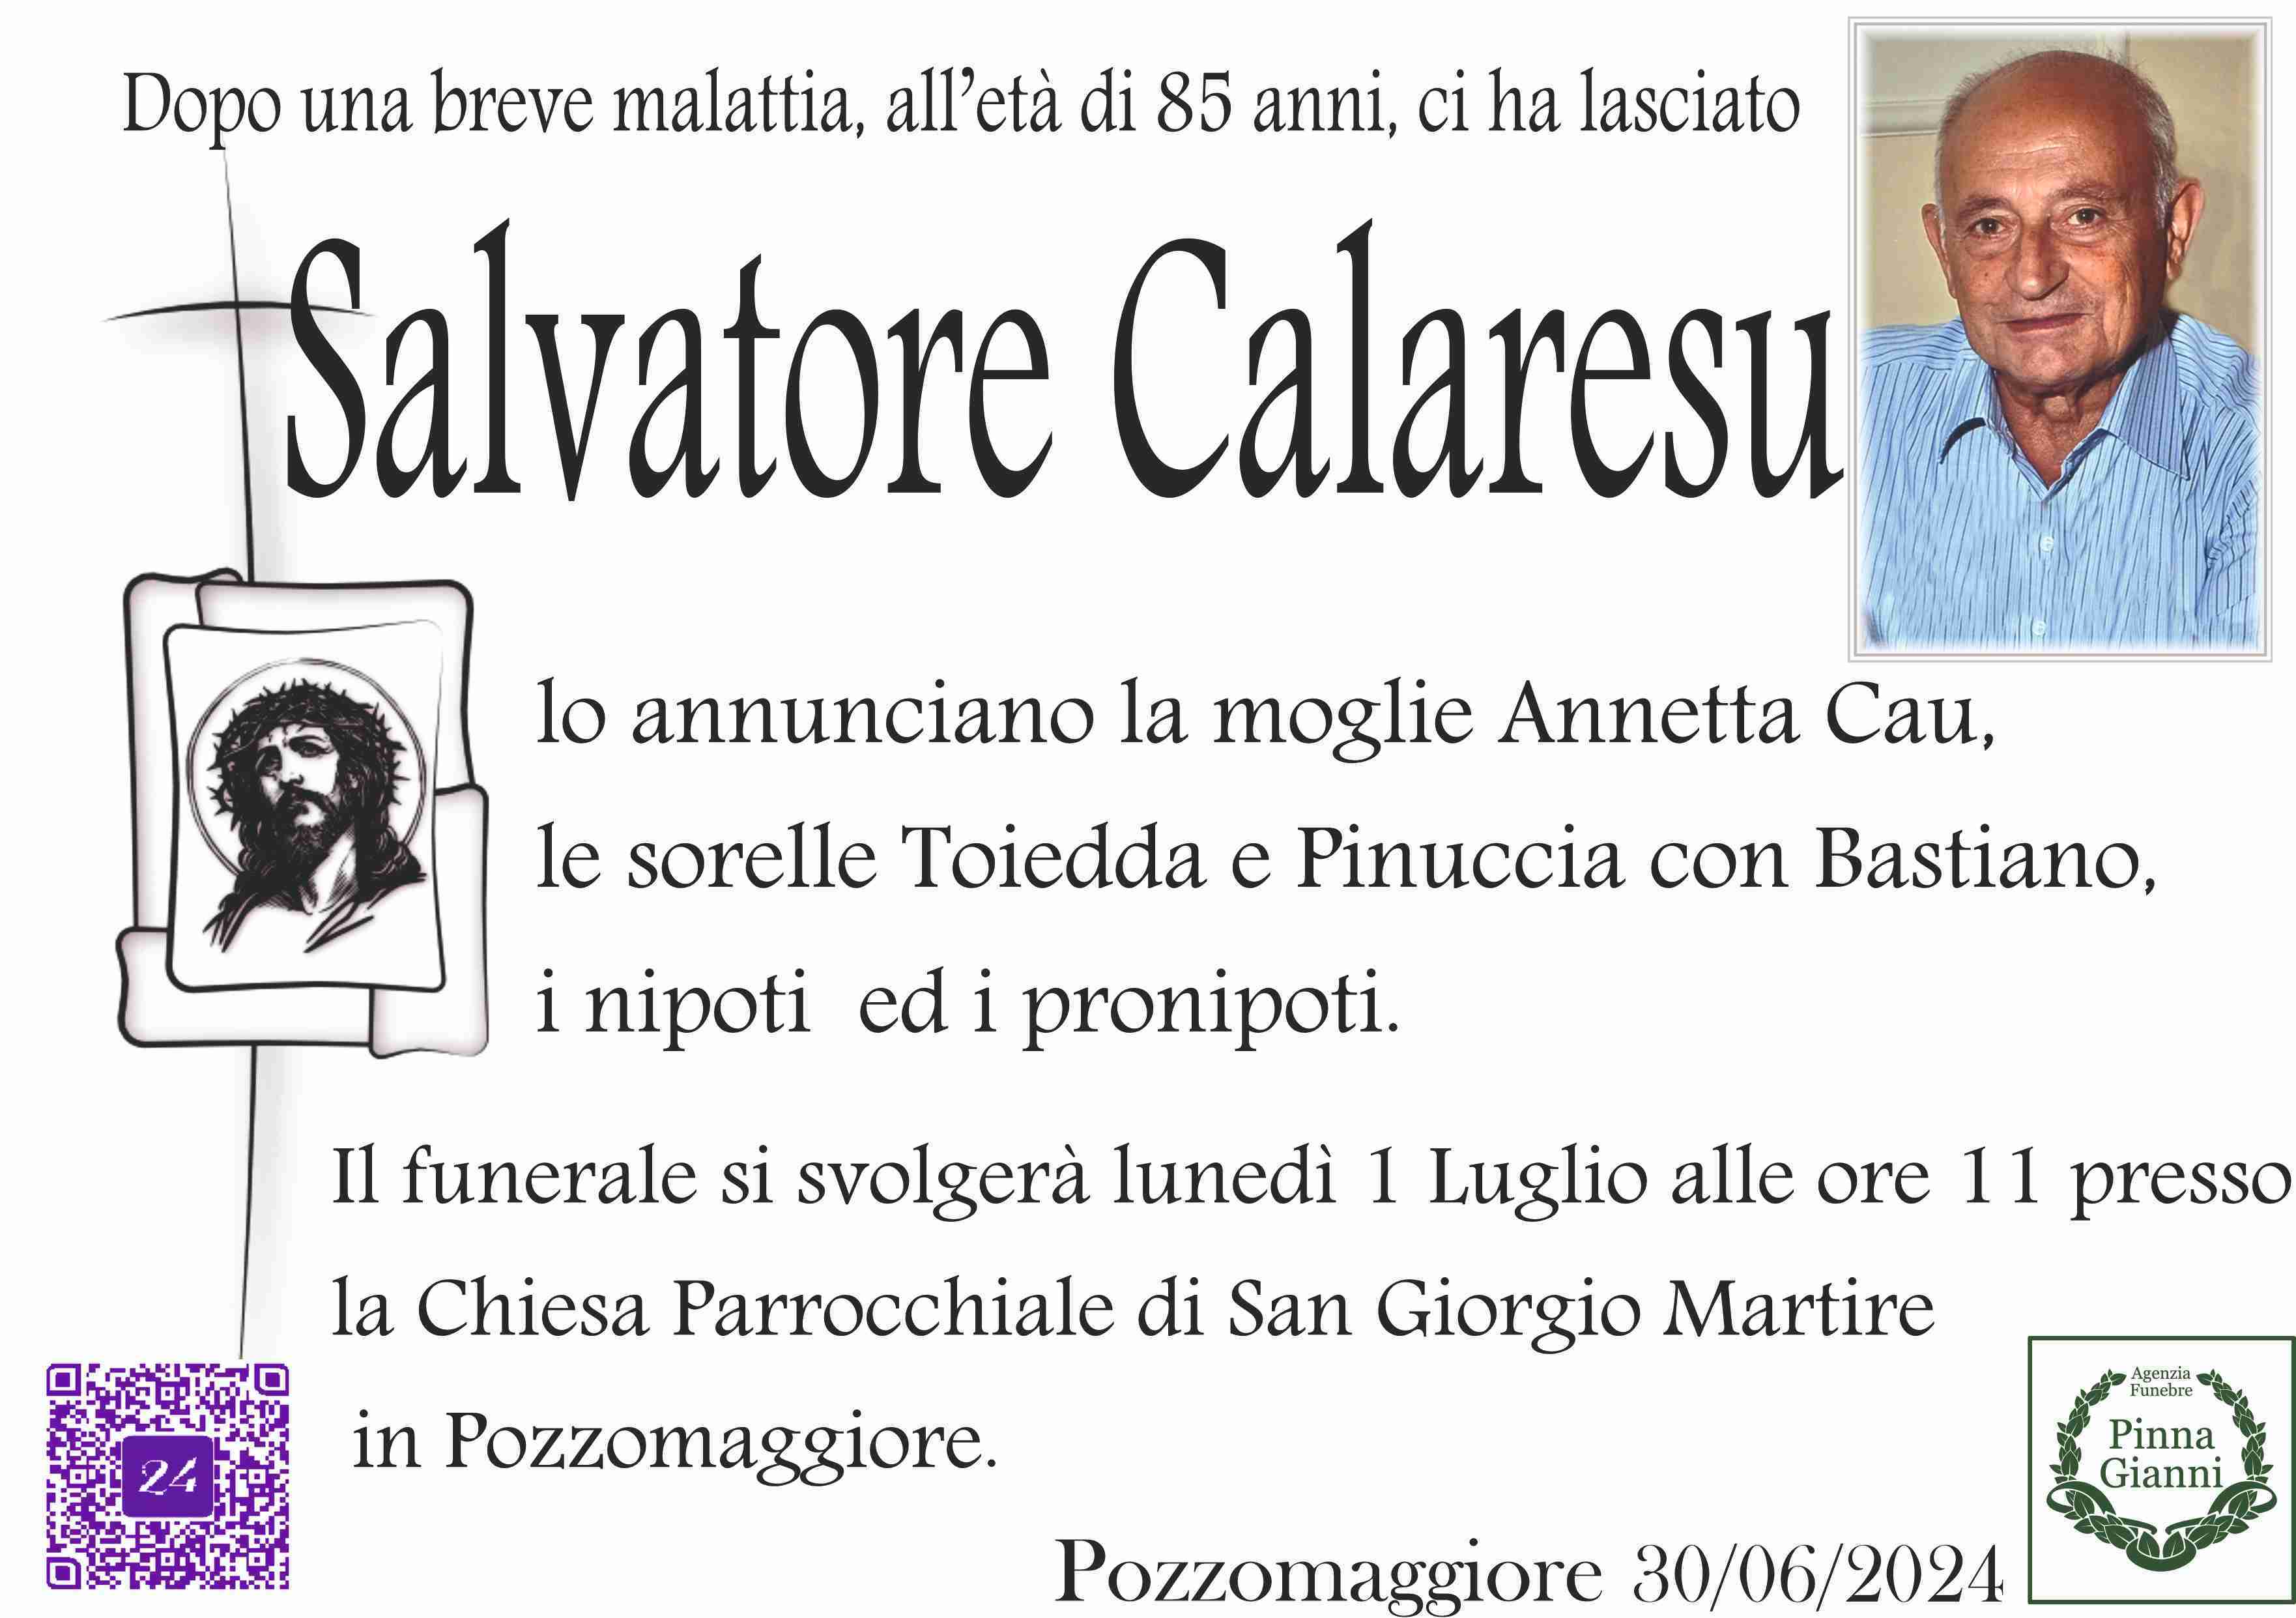 Salvatore Calaresu